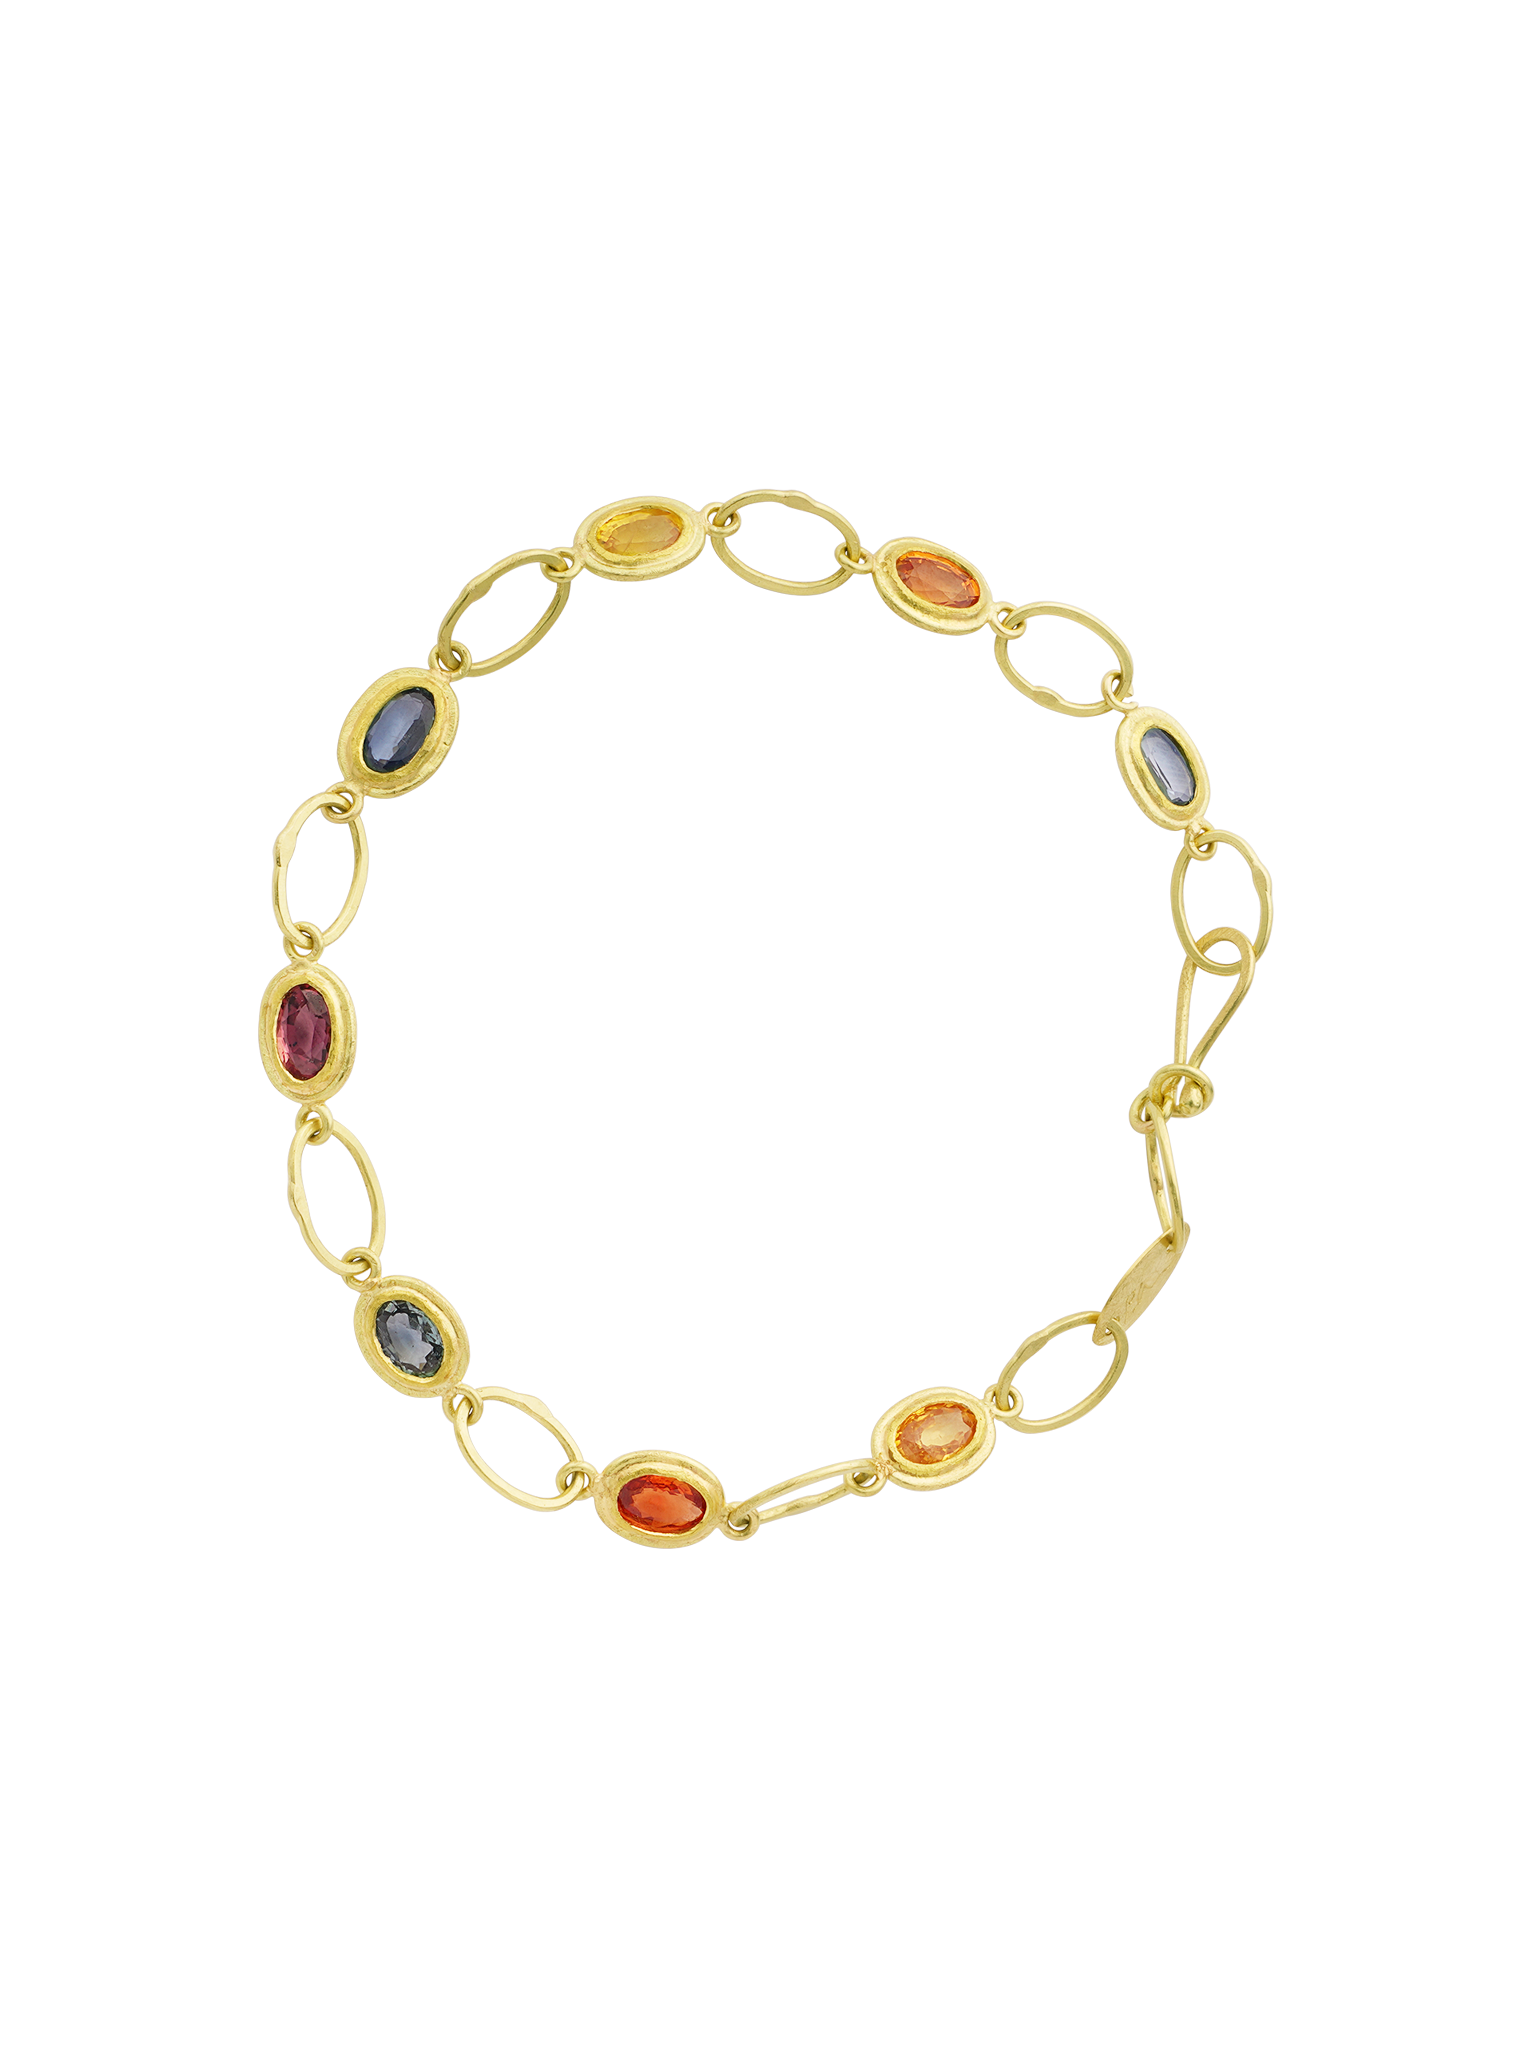 Multicolored sapphire oval link bracelet